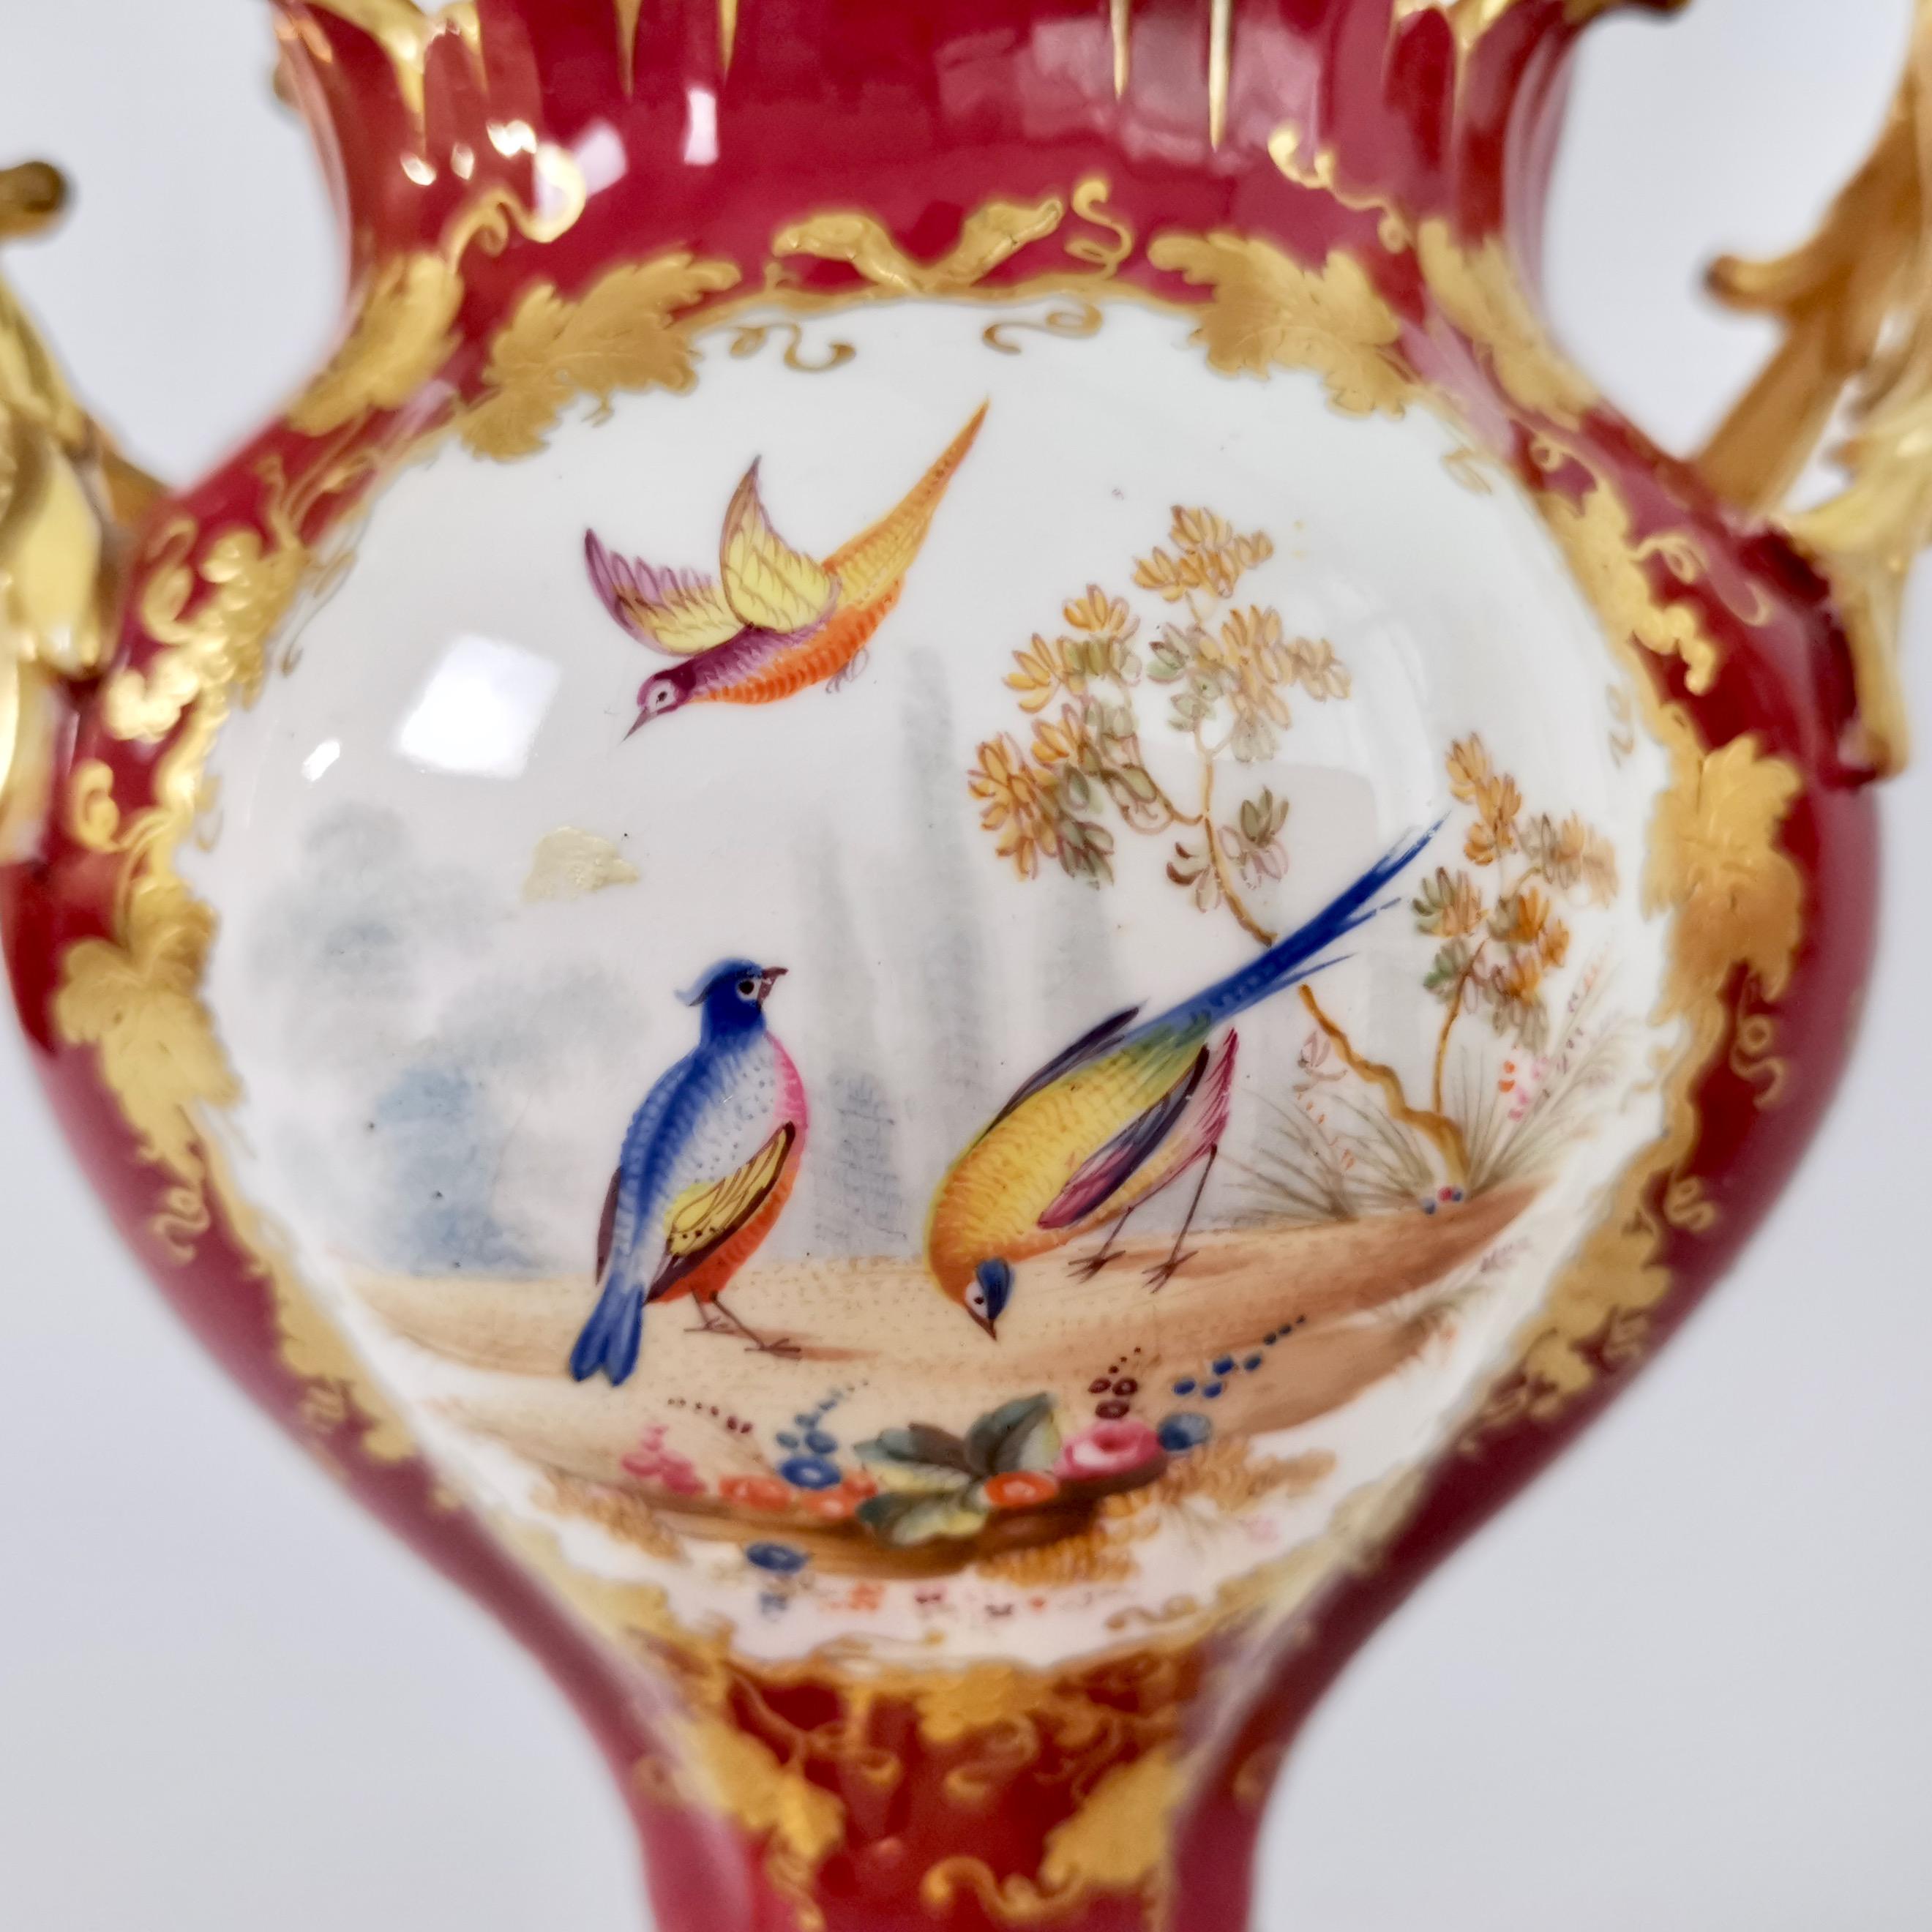 H&R Daniel Pair of Potpourri Vases, Maroon, Birds, Flowers, Rococo Revival c1840 In Good Condition For Sale In London, GB